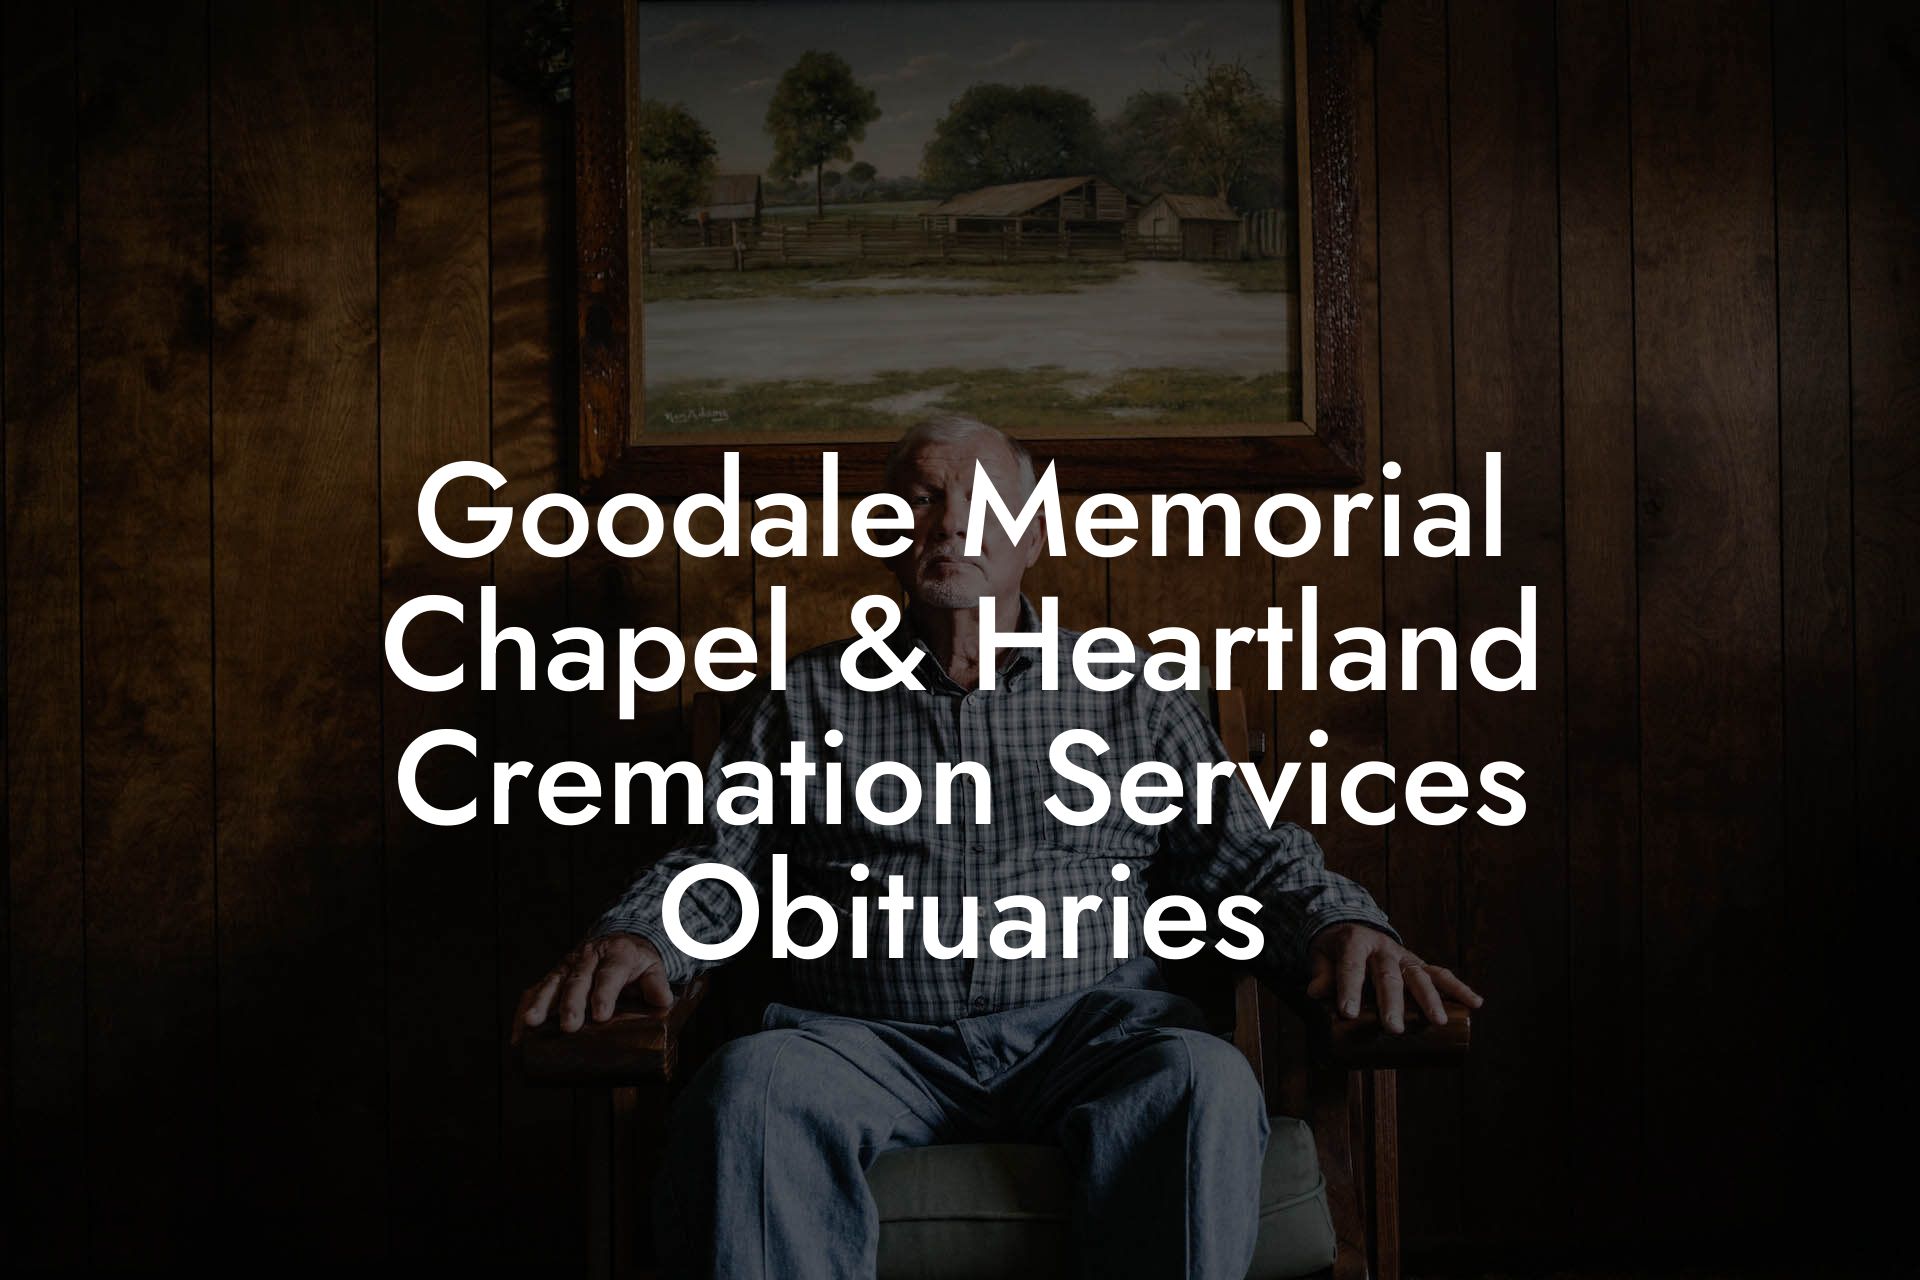 Goodale Memorial Chapel & Heartland Cremation Services Obituaries